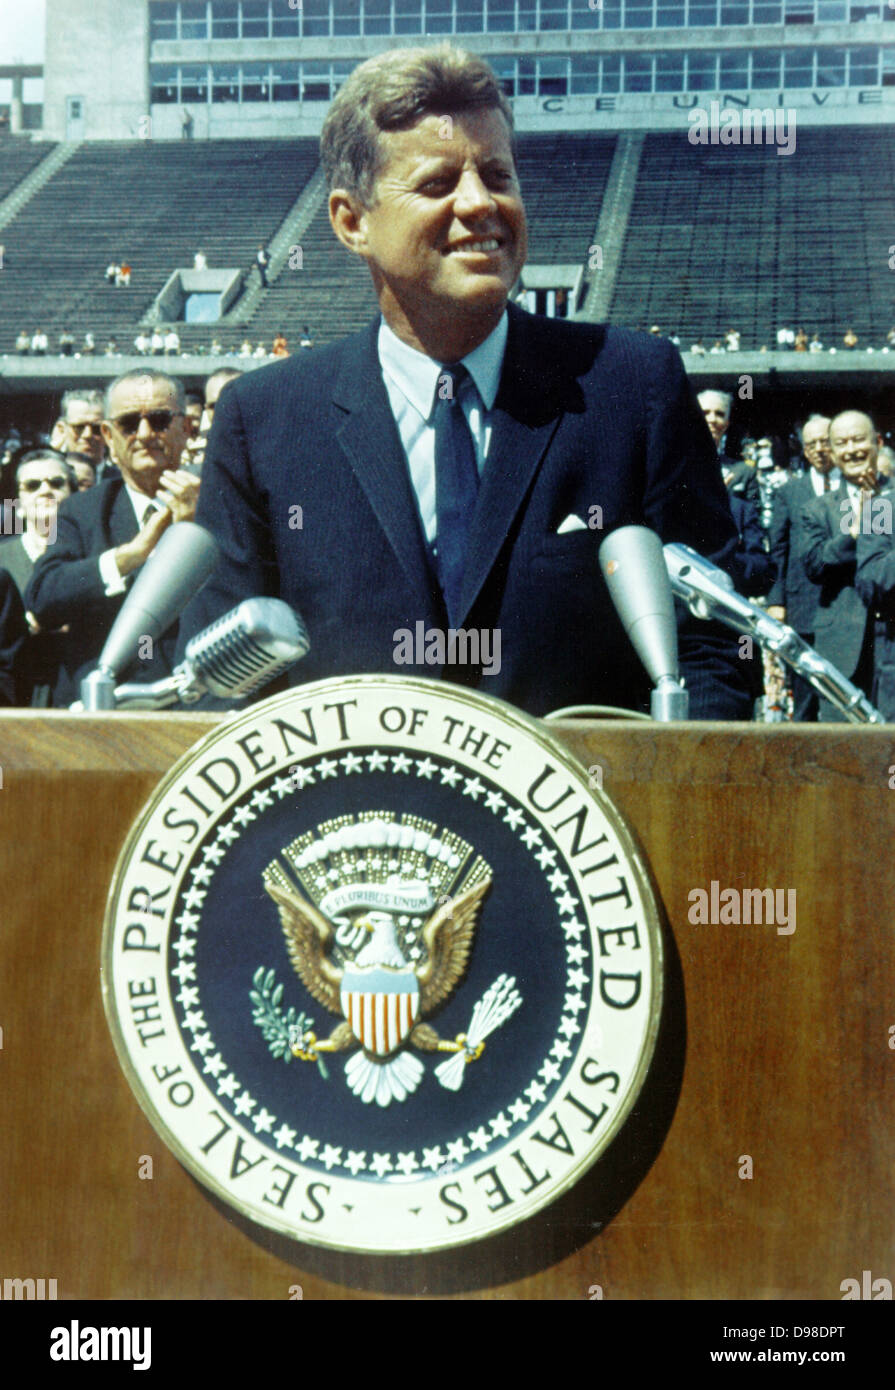 John F Kennedy (1917-1963) 35th President of the United States of America (1961-1963) spaking on travel to the Moon, Rice University Stadium 12 September 1962. Applauding on left is Lyndon B Johnson. Stock Photo